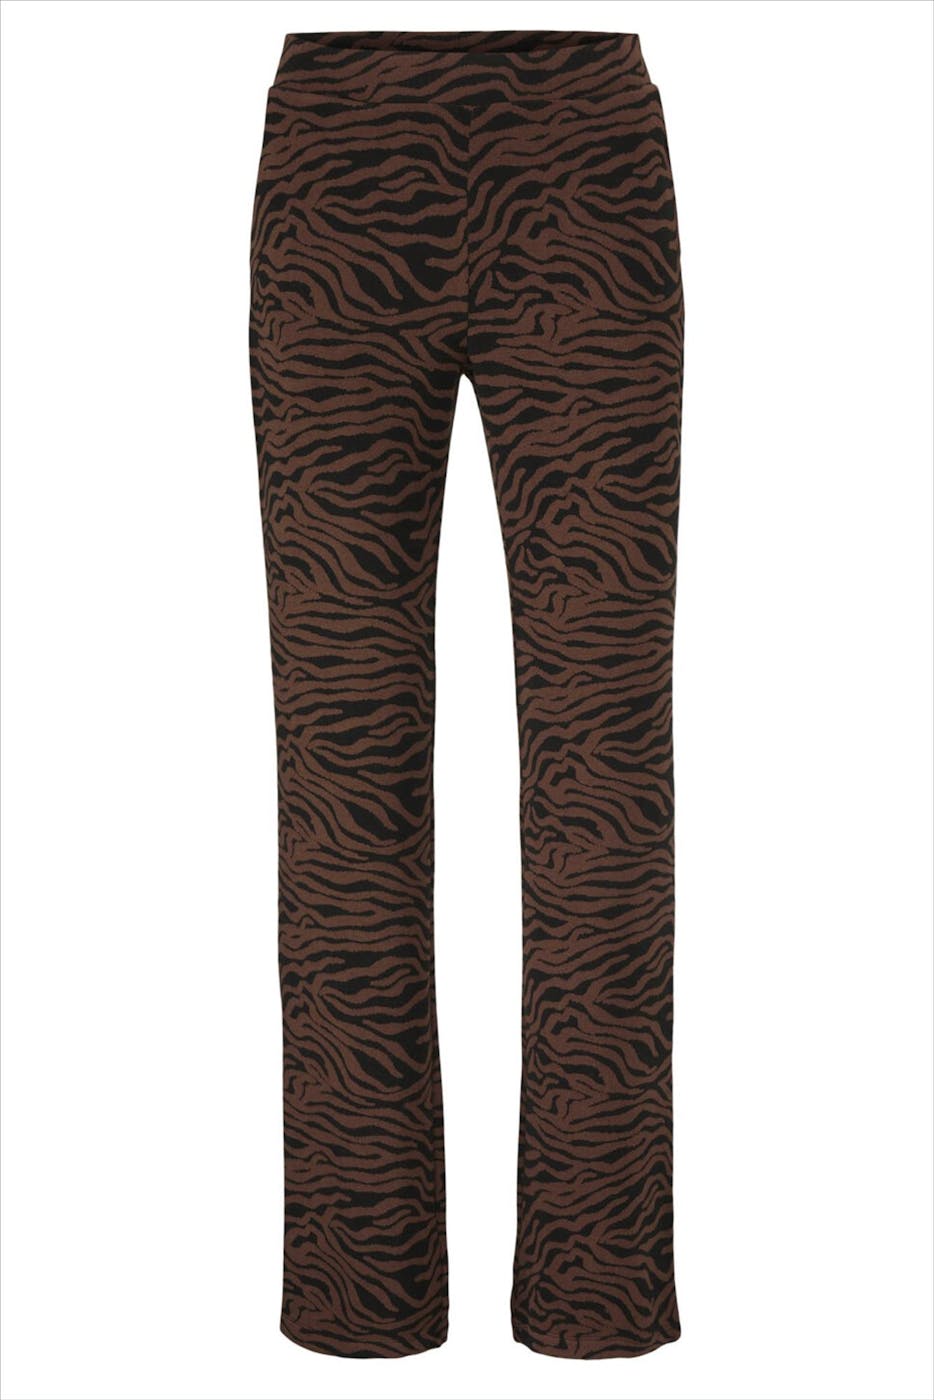 Modström - Bruin-zwarte zebra Ming broek